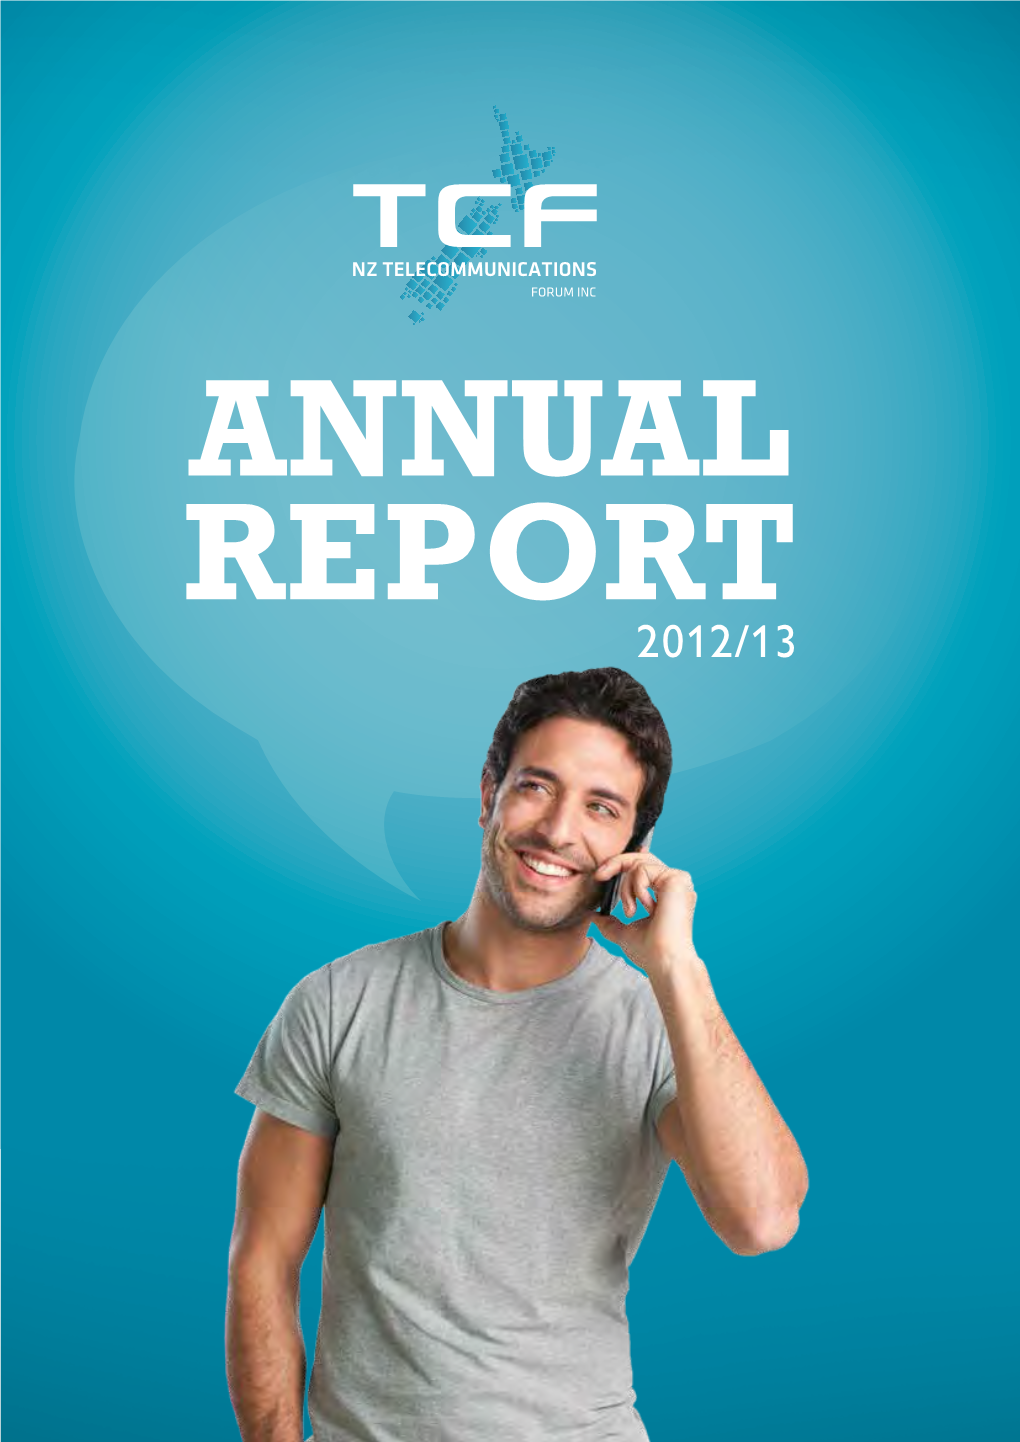 NZ TELECOMMUNICATIONS FORUM ANNUAL REPORT 2012/13 A